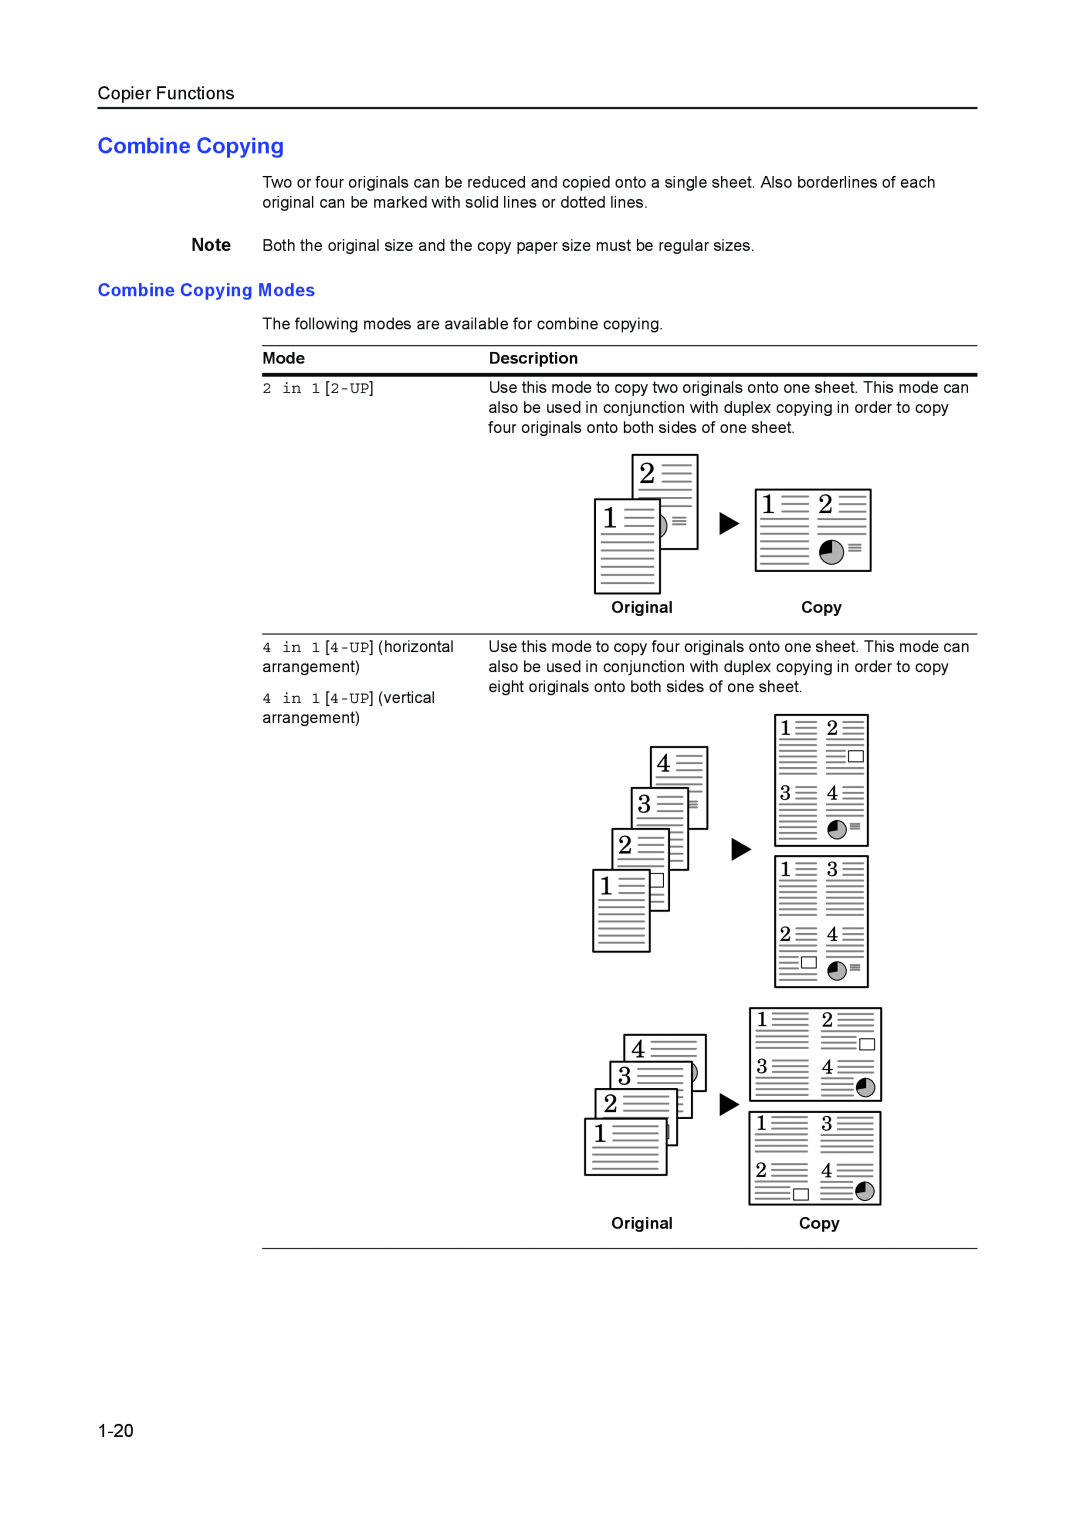 Kyocera 1650, 2050, 2550 manual Combine Copying Modes, 1-20, Copier Functions 